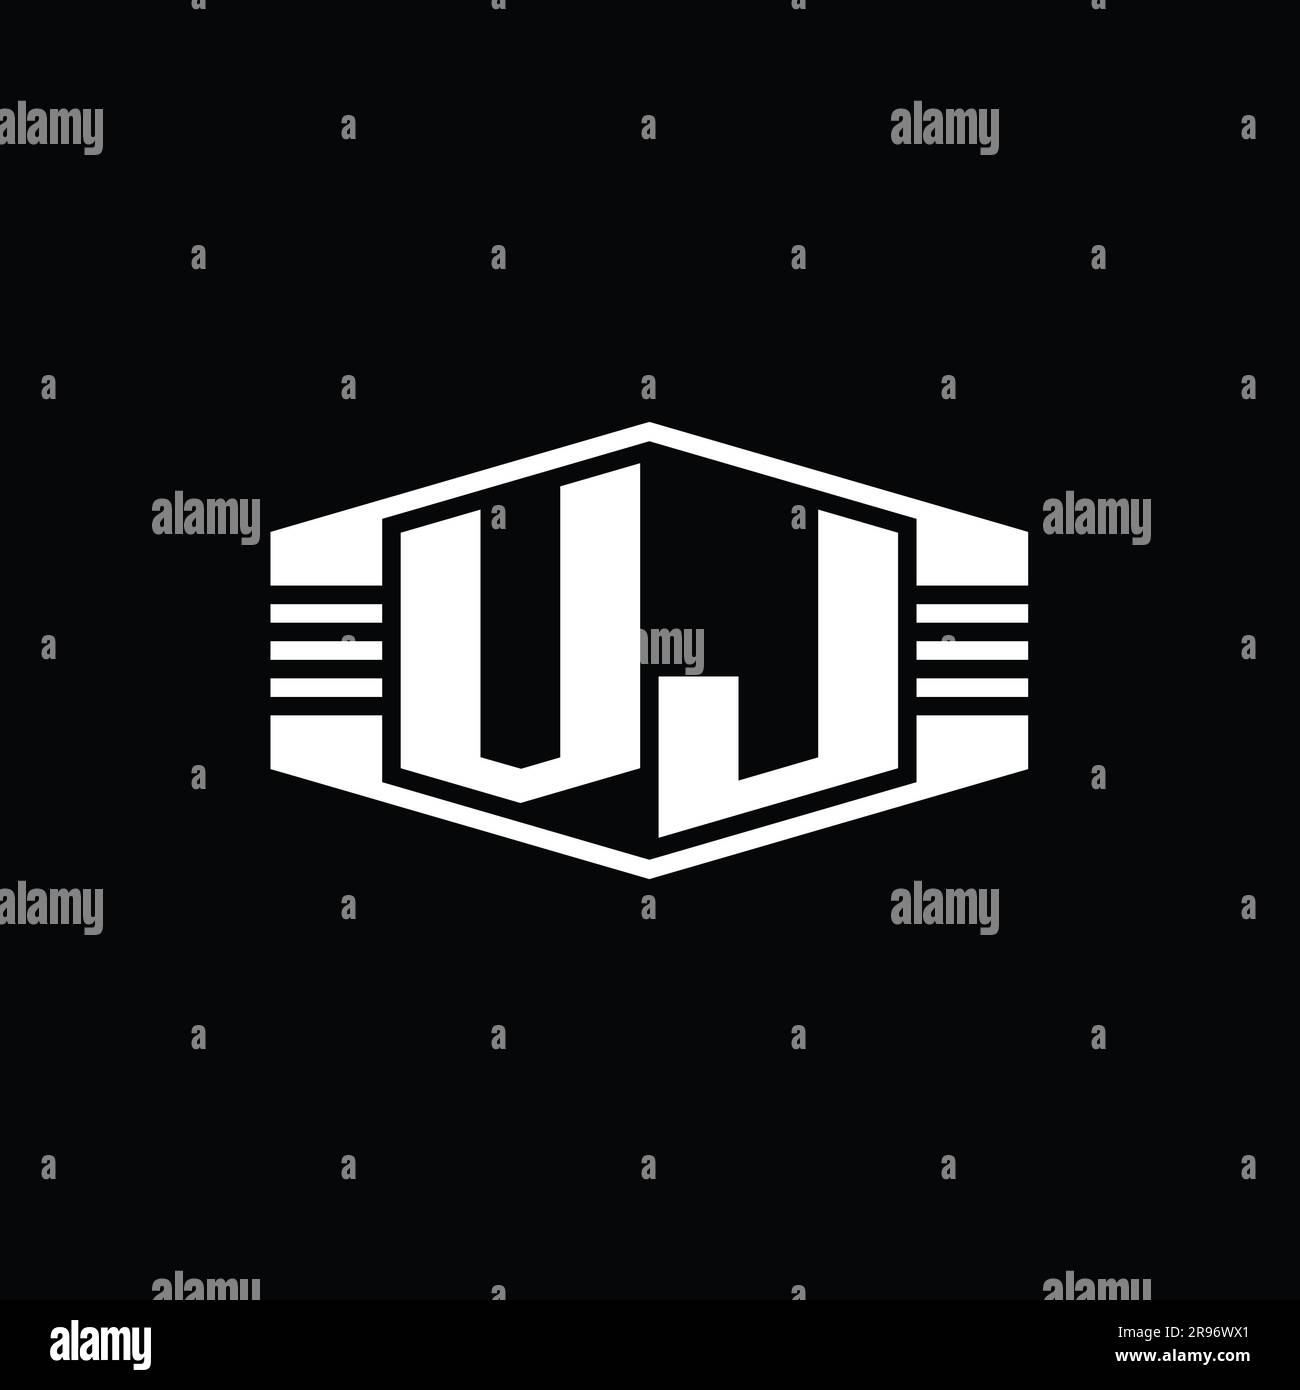 Vj Letter Logo Monogram Hexagon Emblem Shape With Stripes Outline Style Design Template Stock